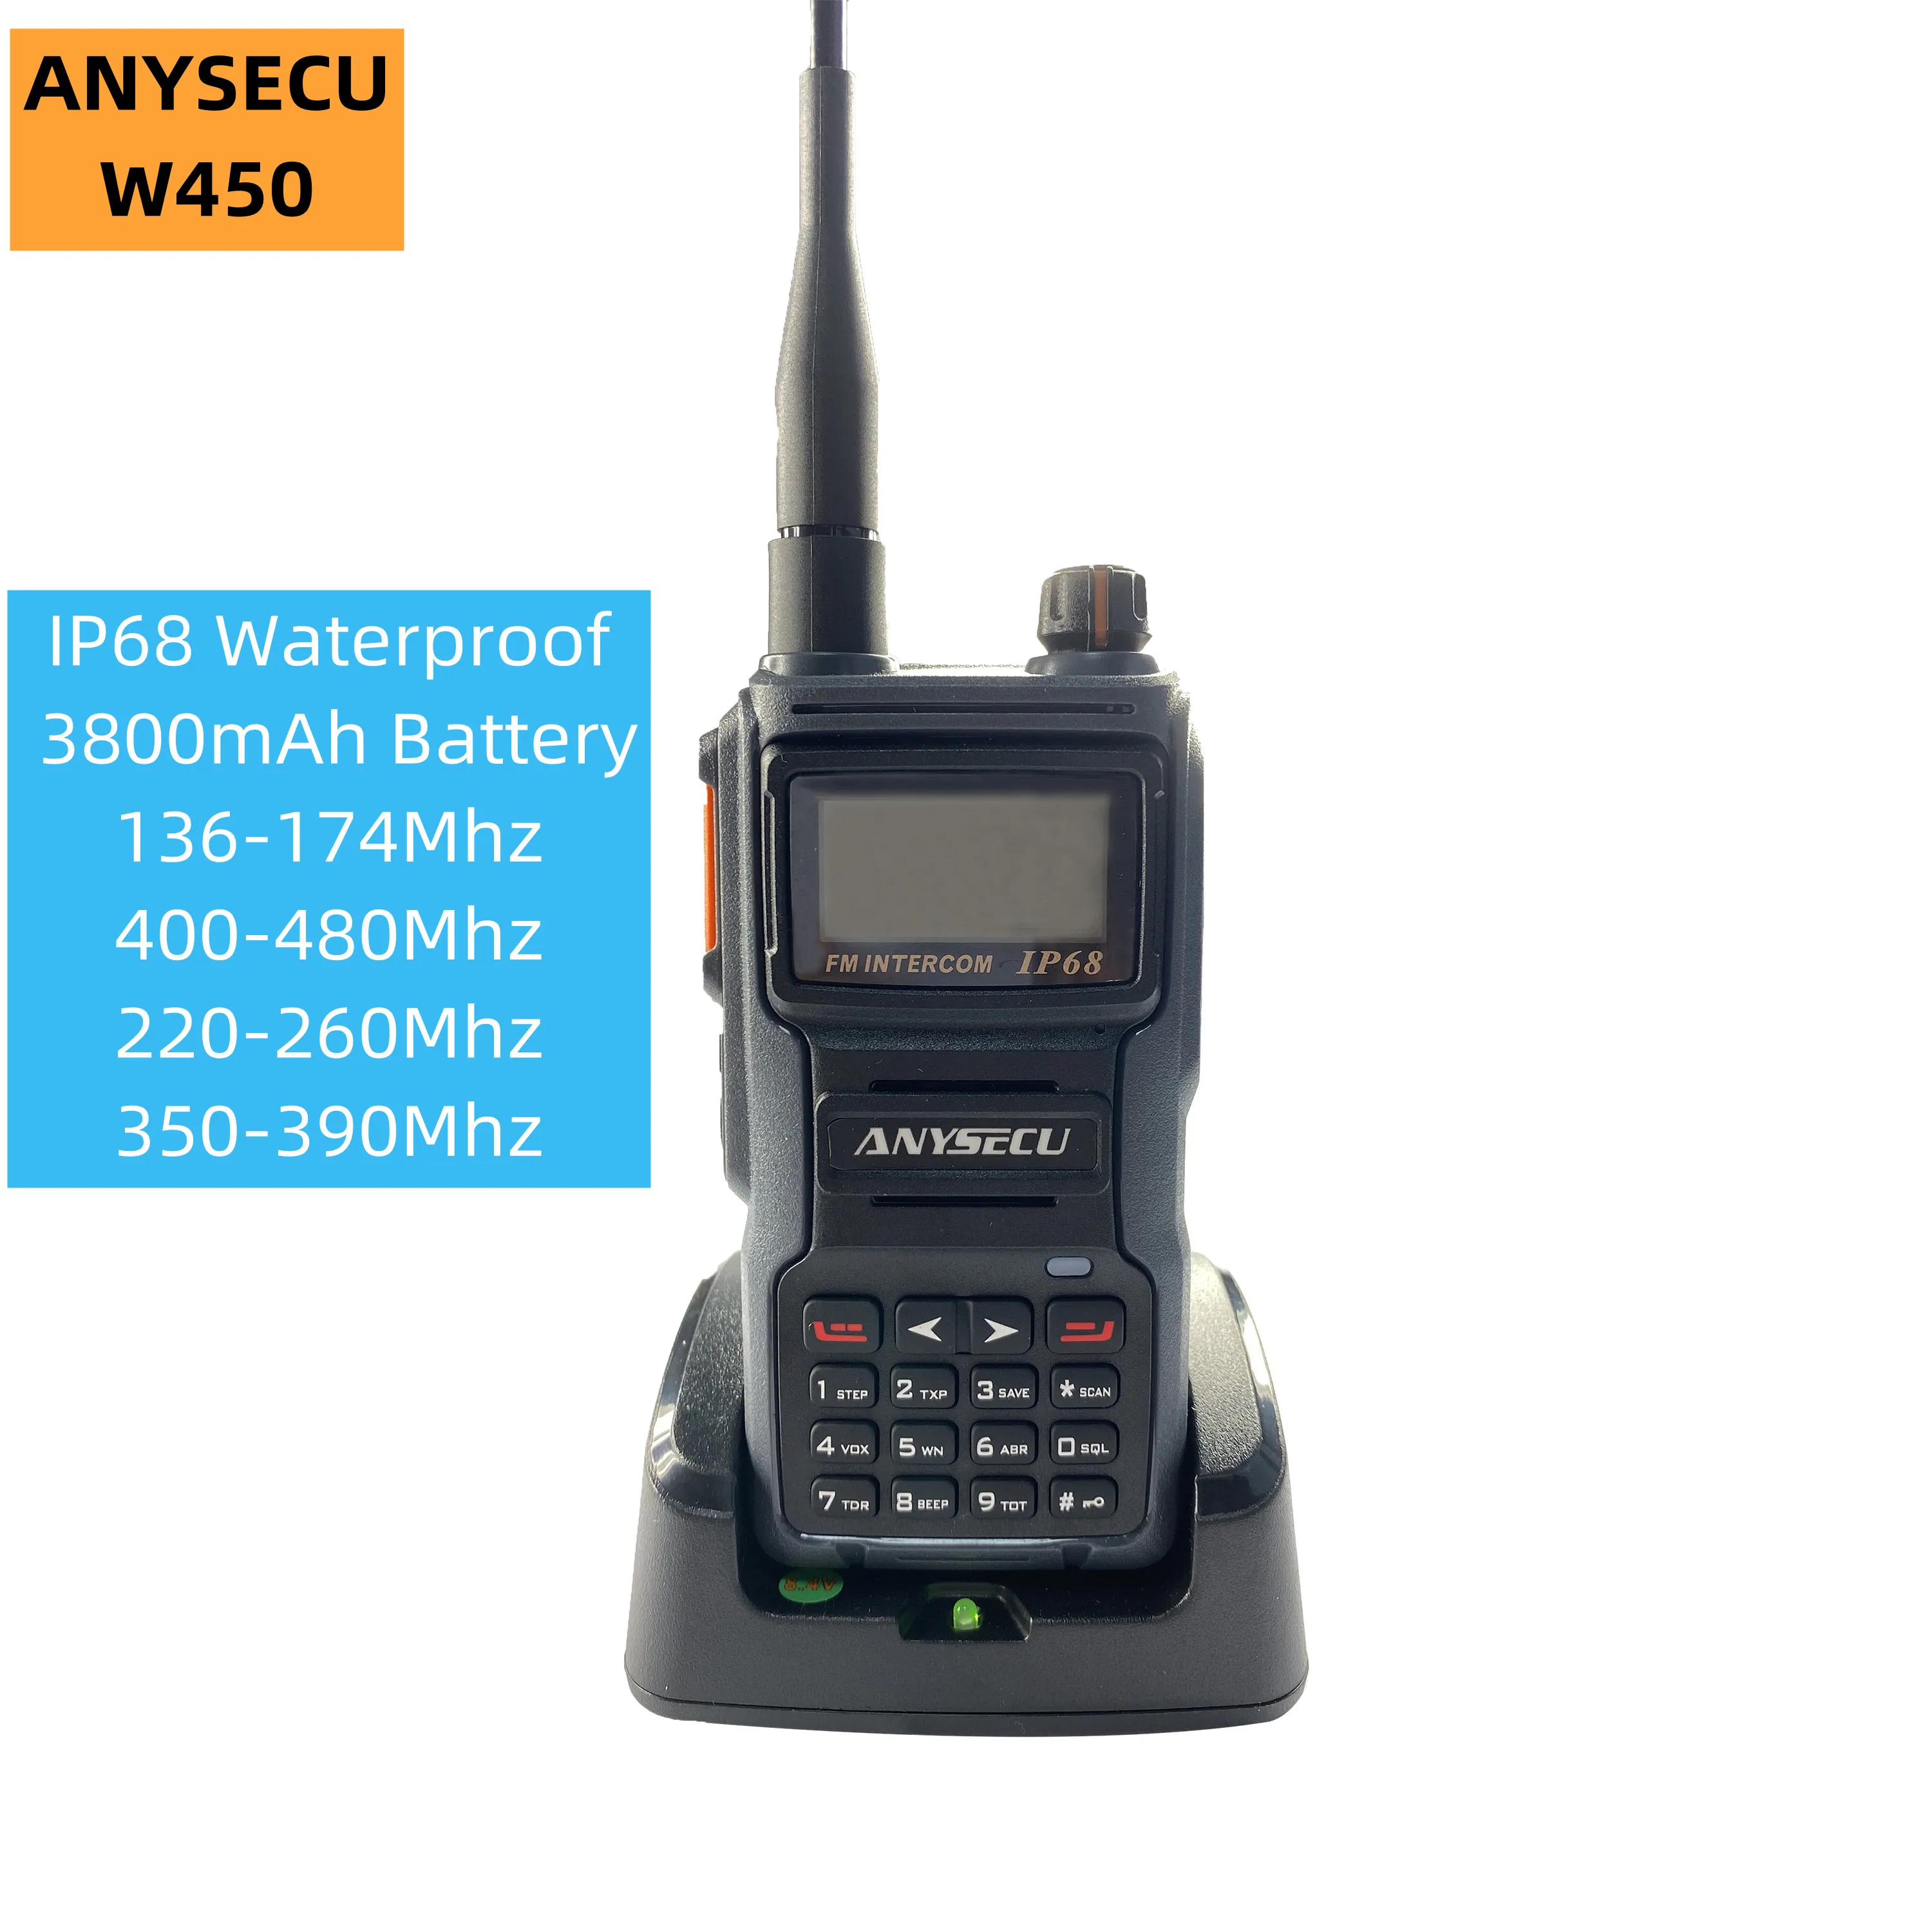 New ANYSECU W450 IP68 Waterproof UHF/VHF Dual Segment Analog Handheld Walkie Talkie 3800mAh One key To Frequency Radio